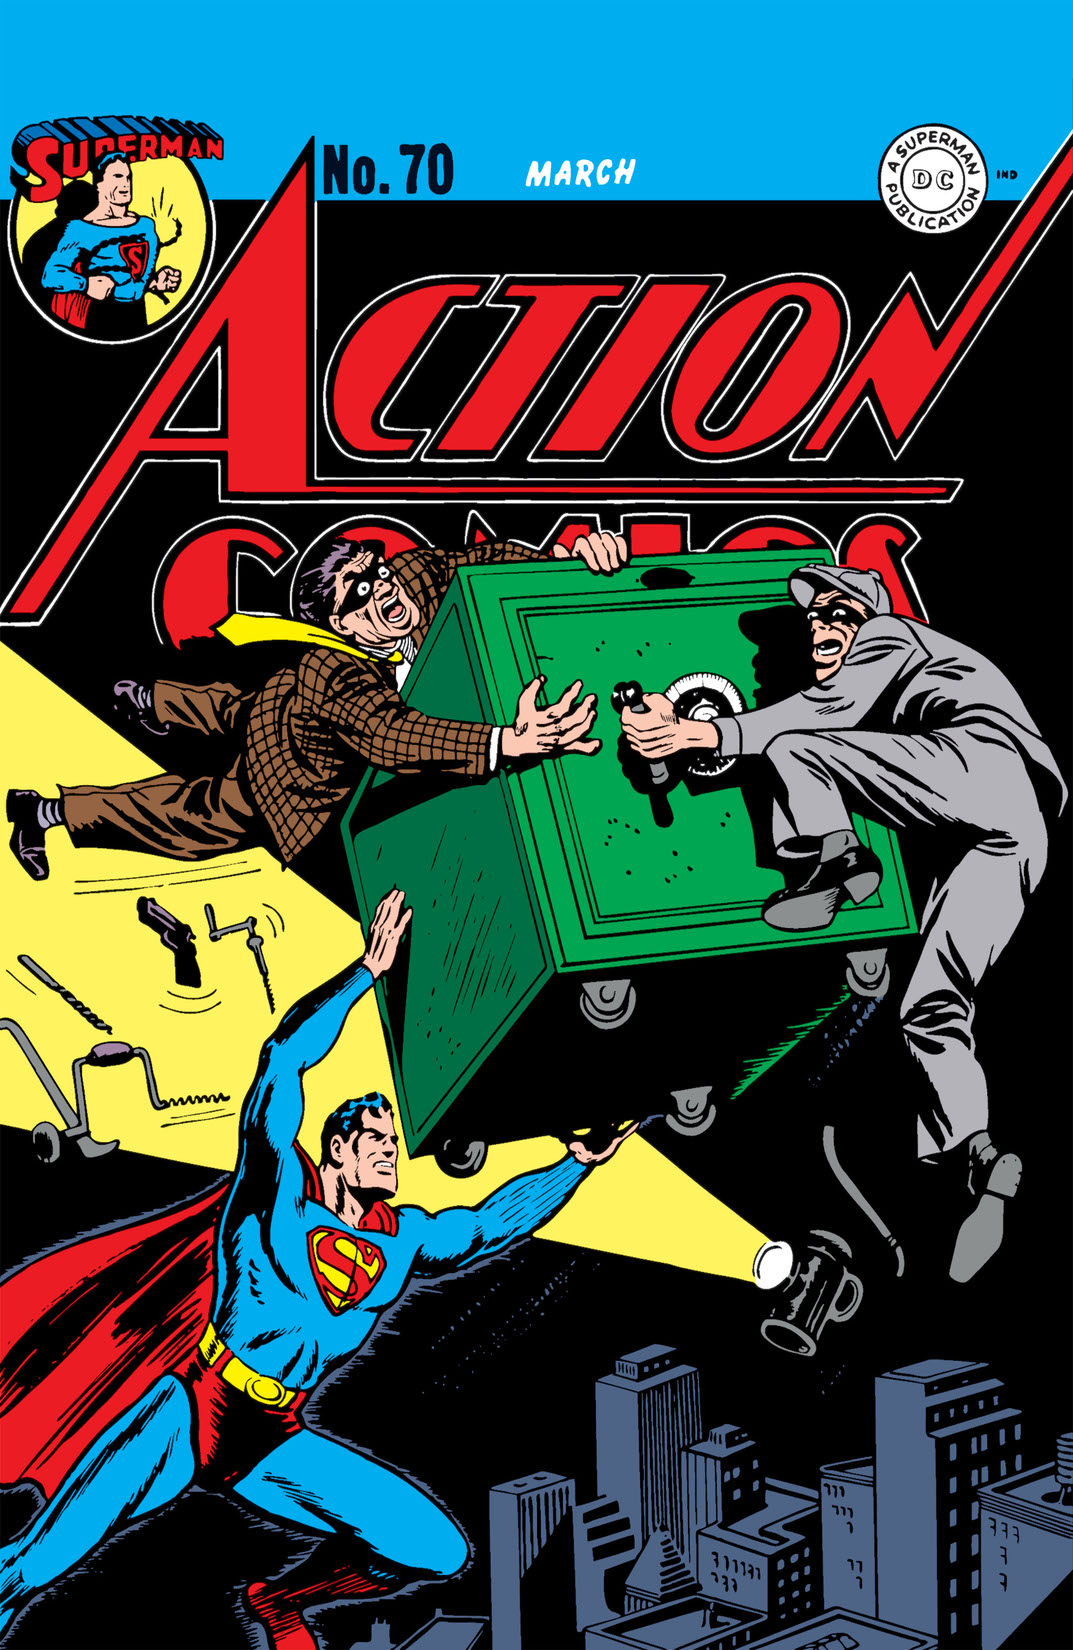 Action Comics (1938-) #70 preview images